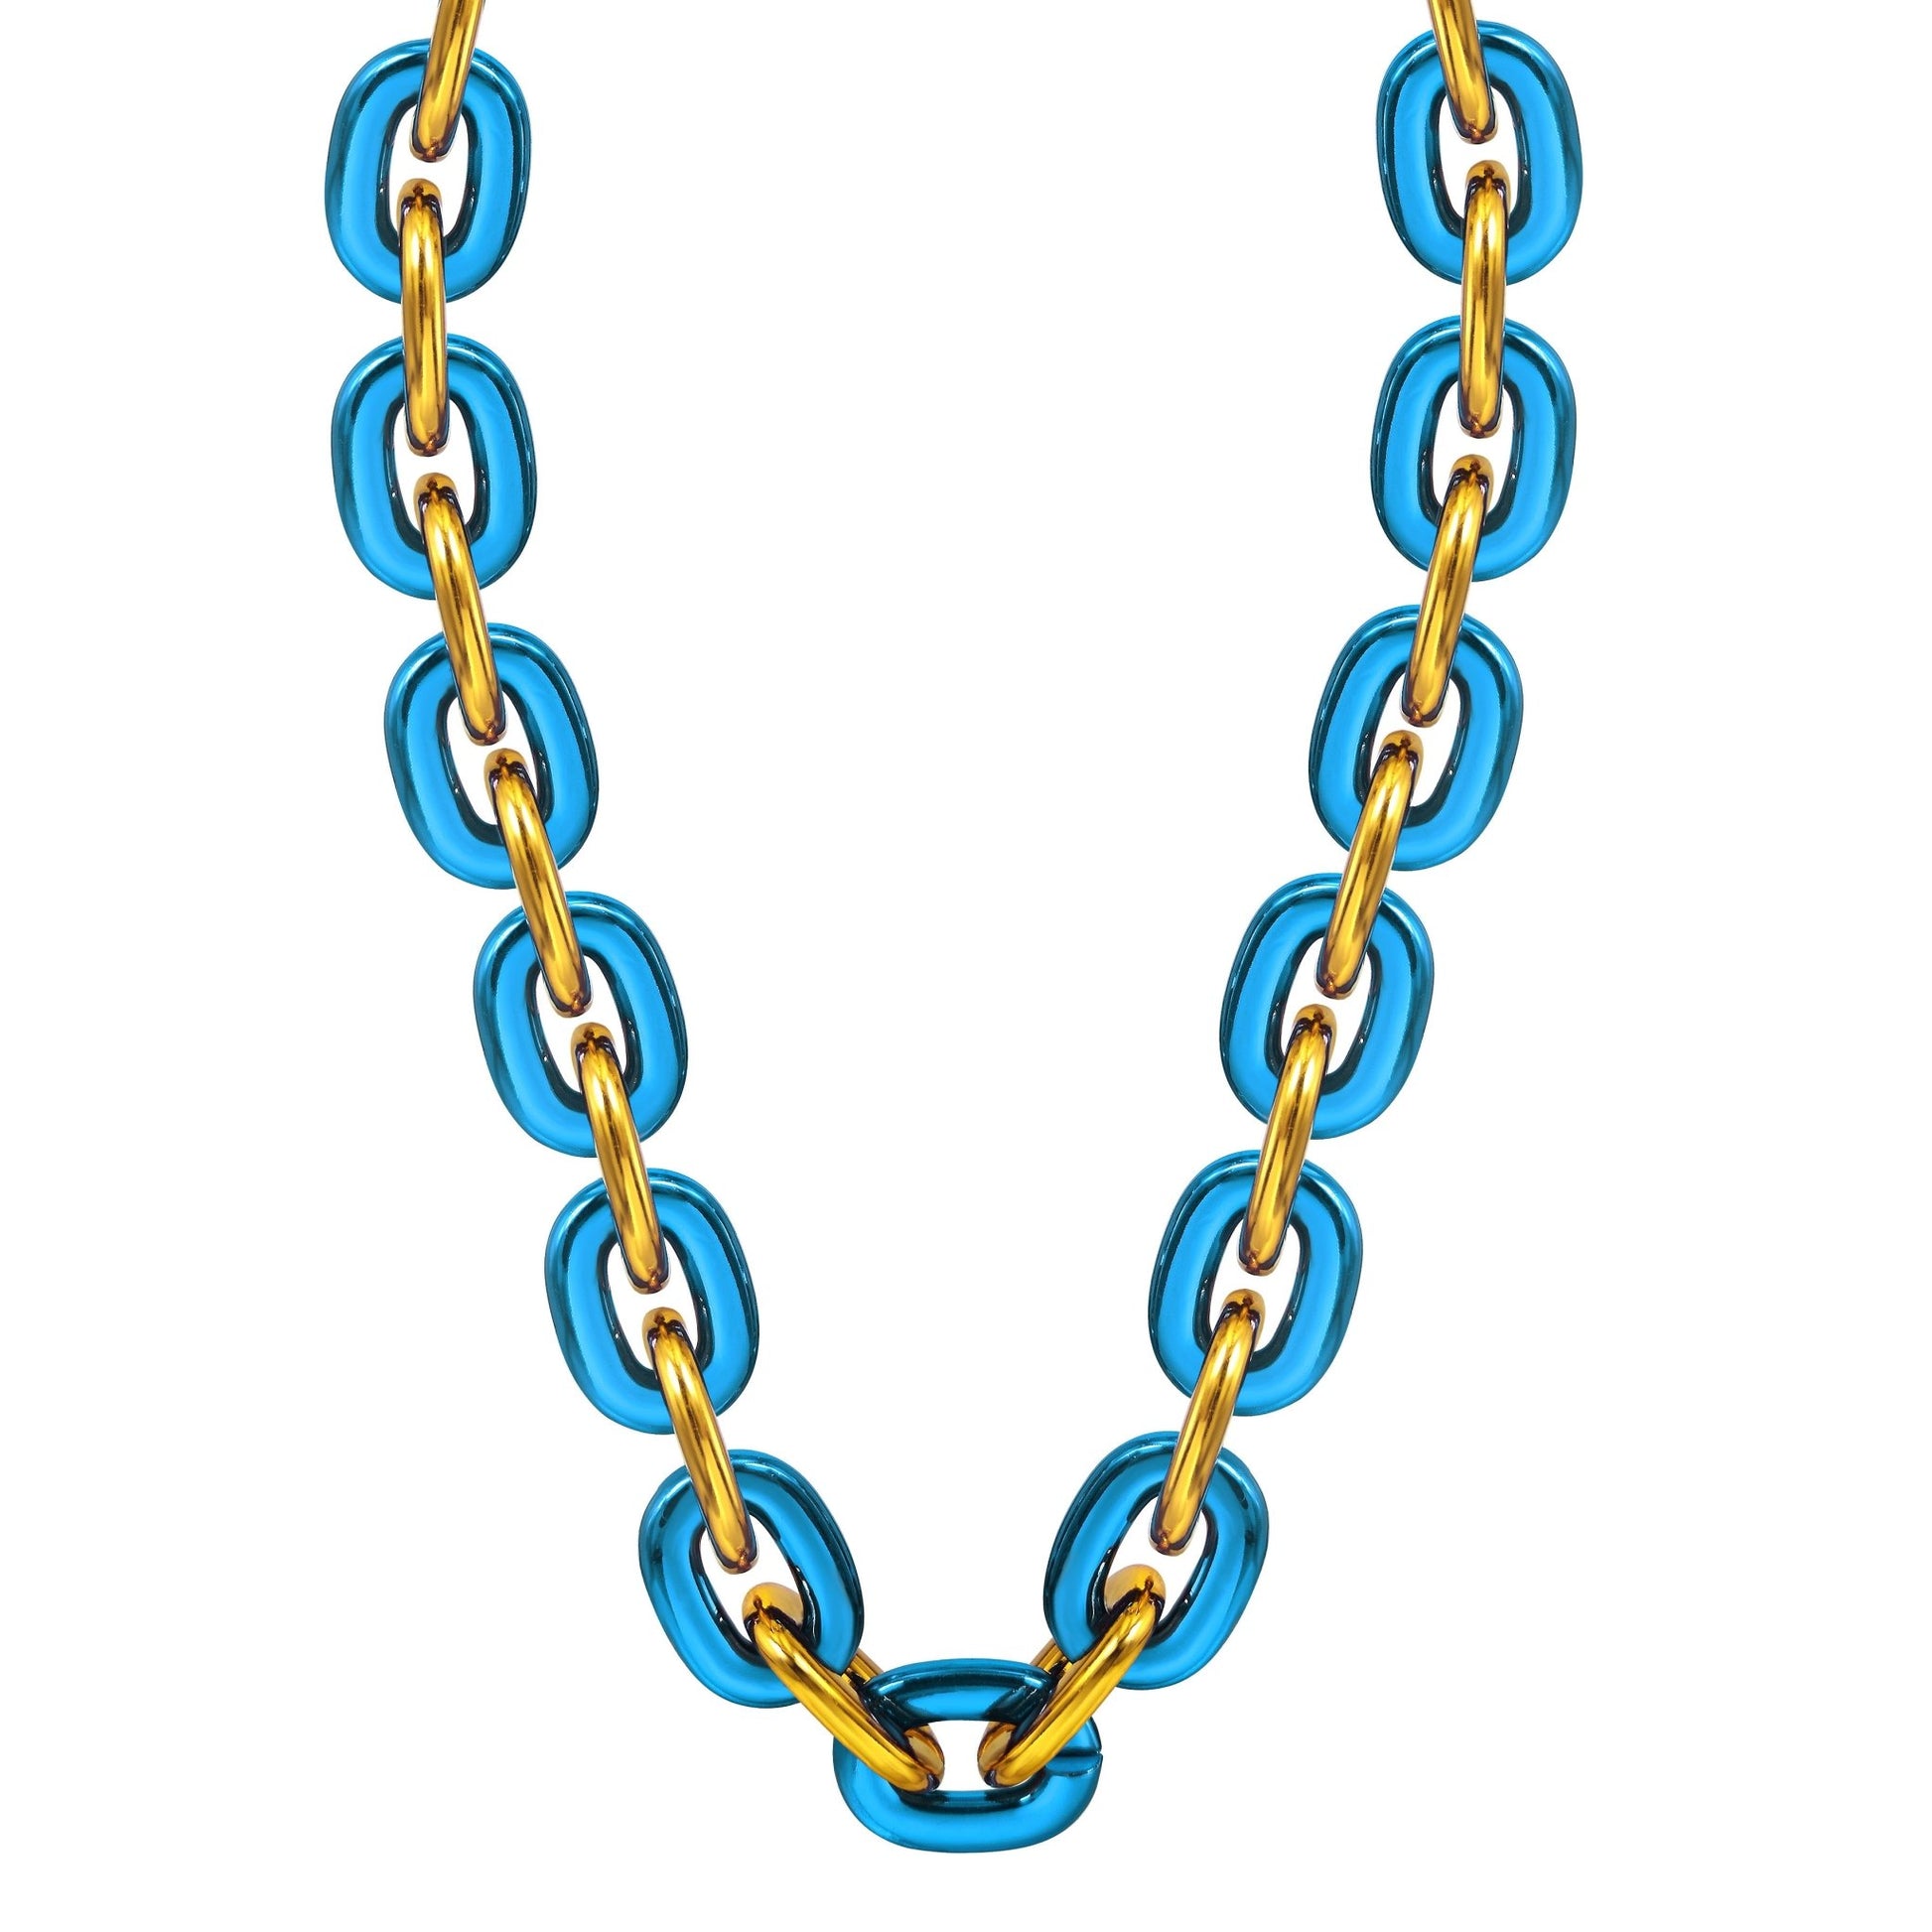 Jumbo Fan Chain Necklace - Gamedays Gear - Soft Royal Blue / Gold